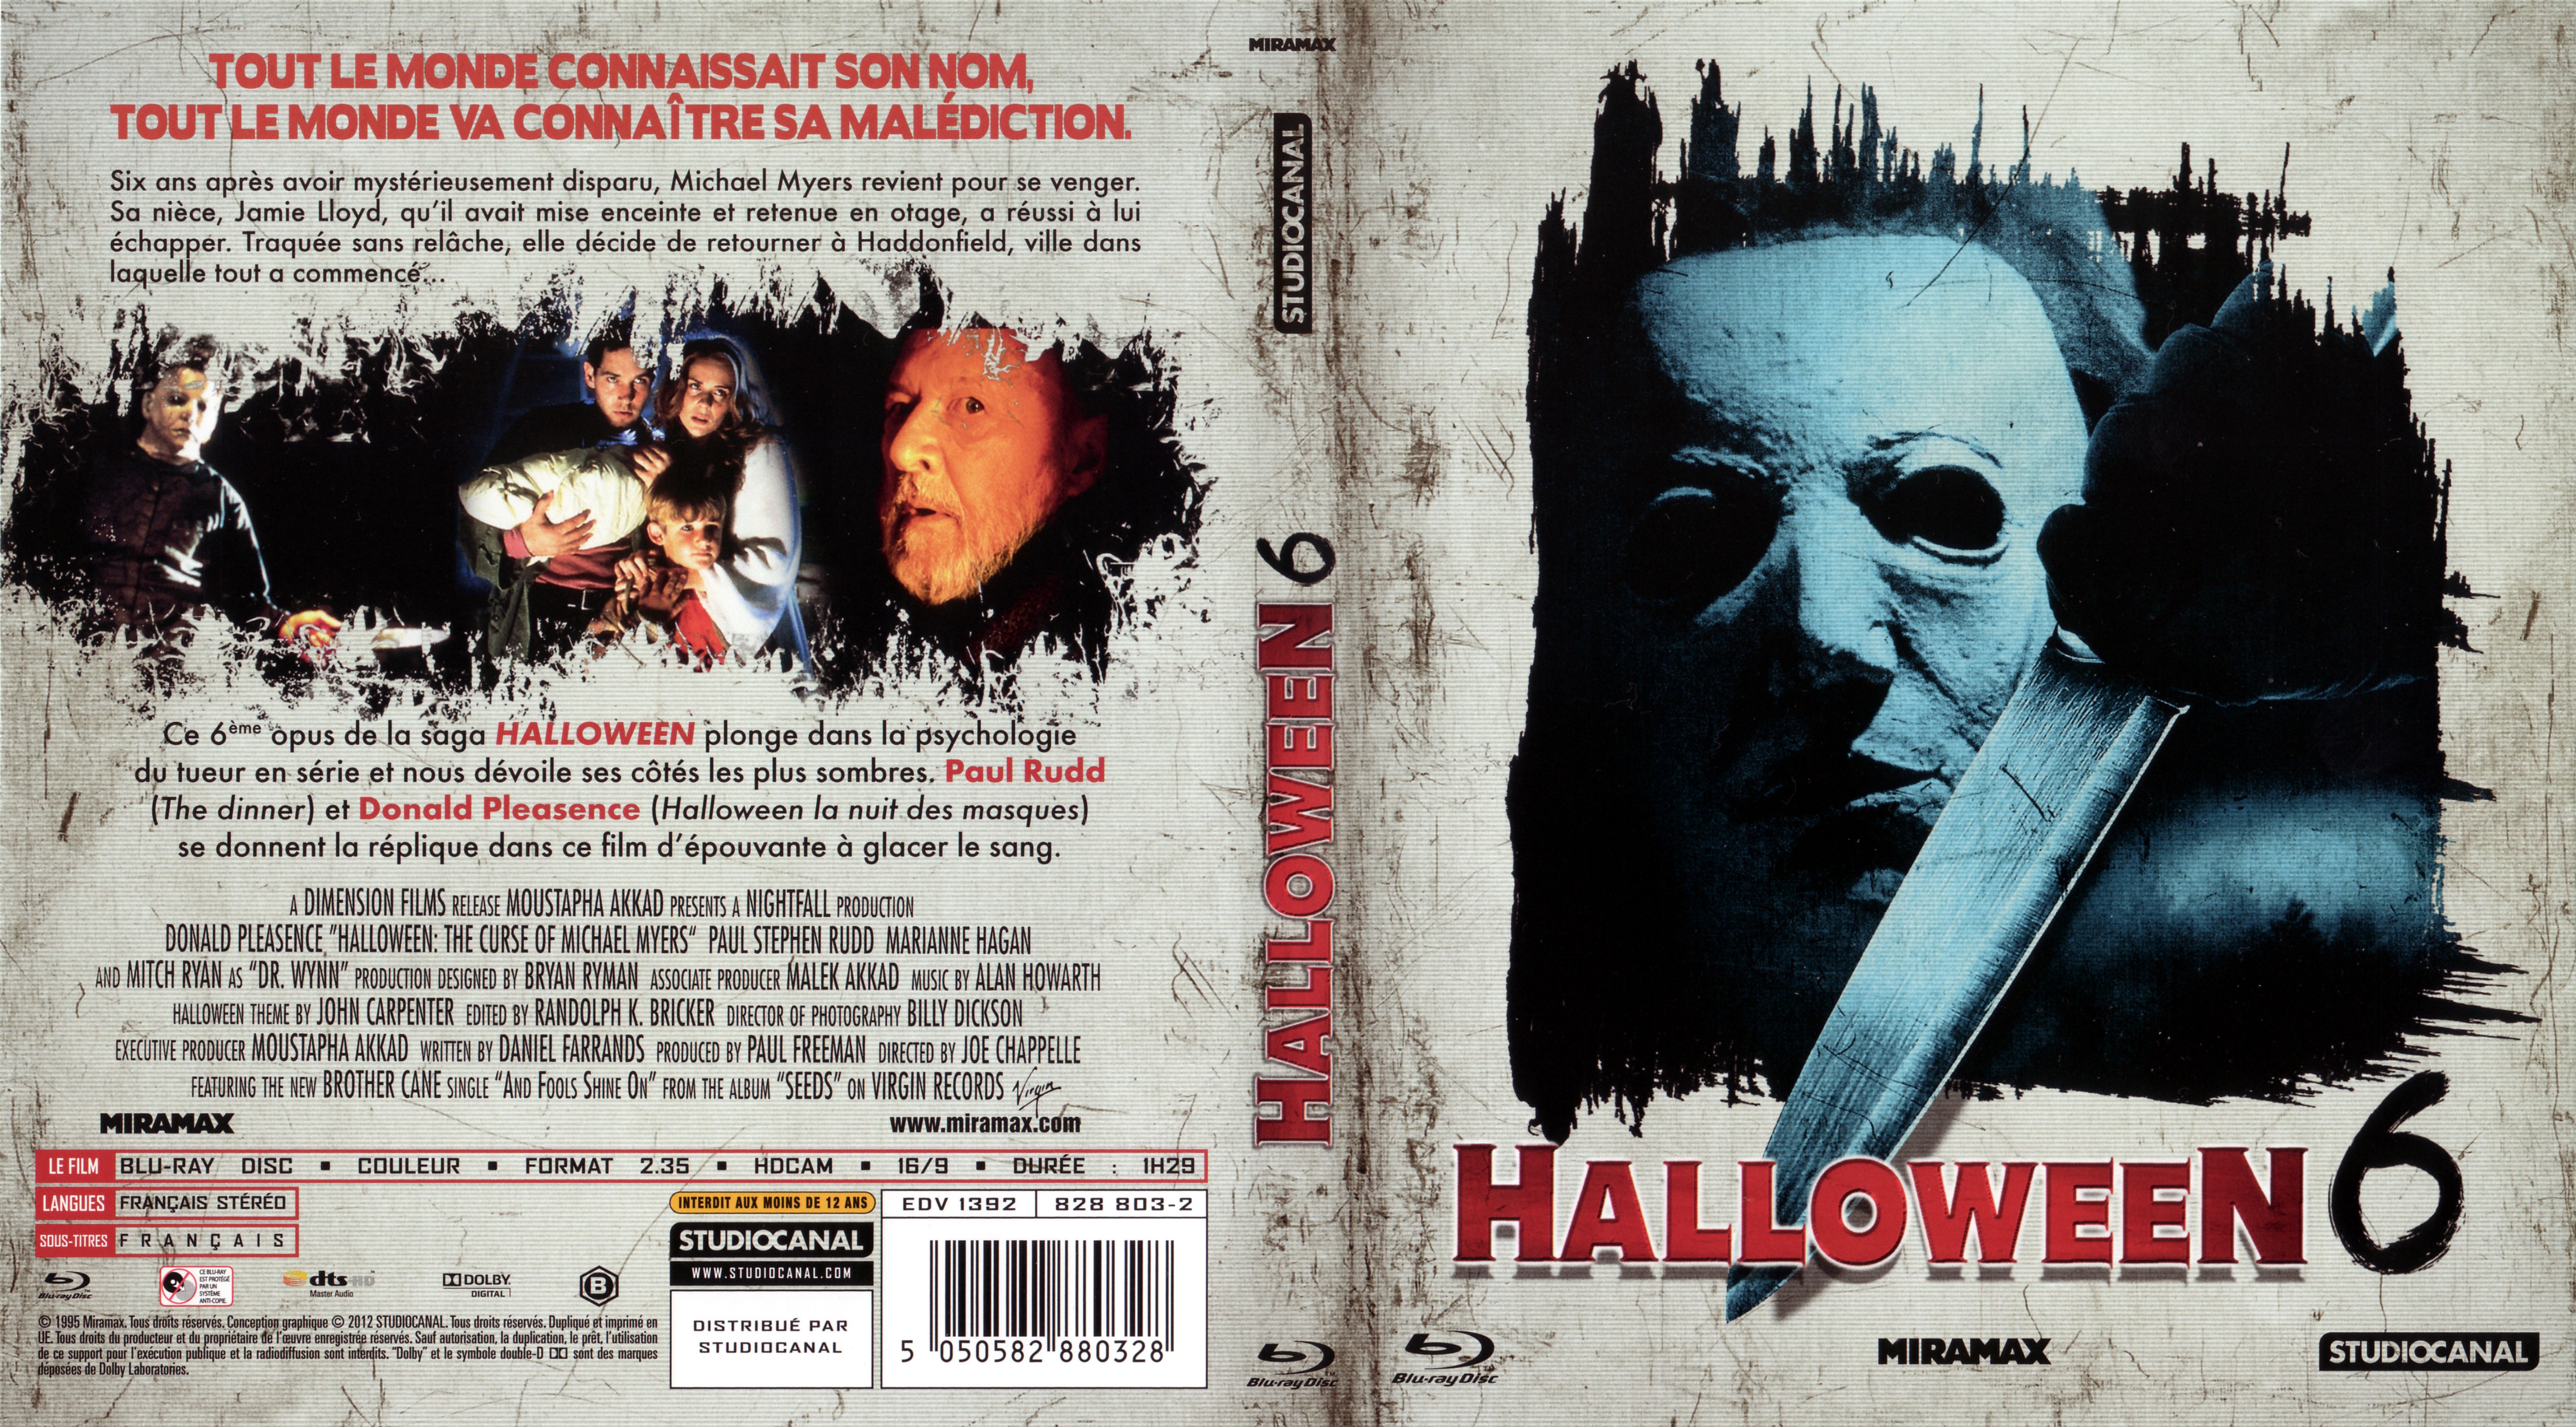 Jaquette DVD Halloween 6 (BLU-RAY)